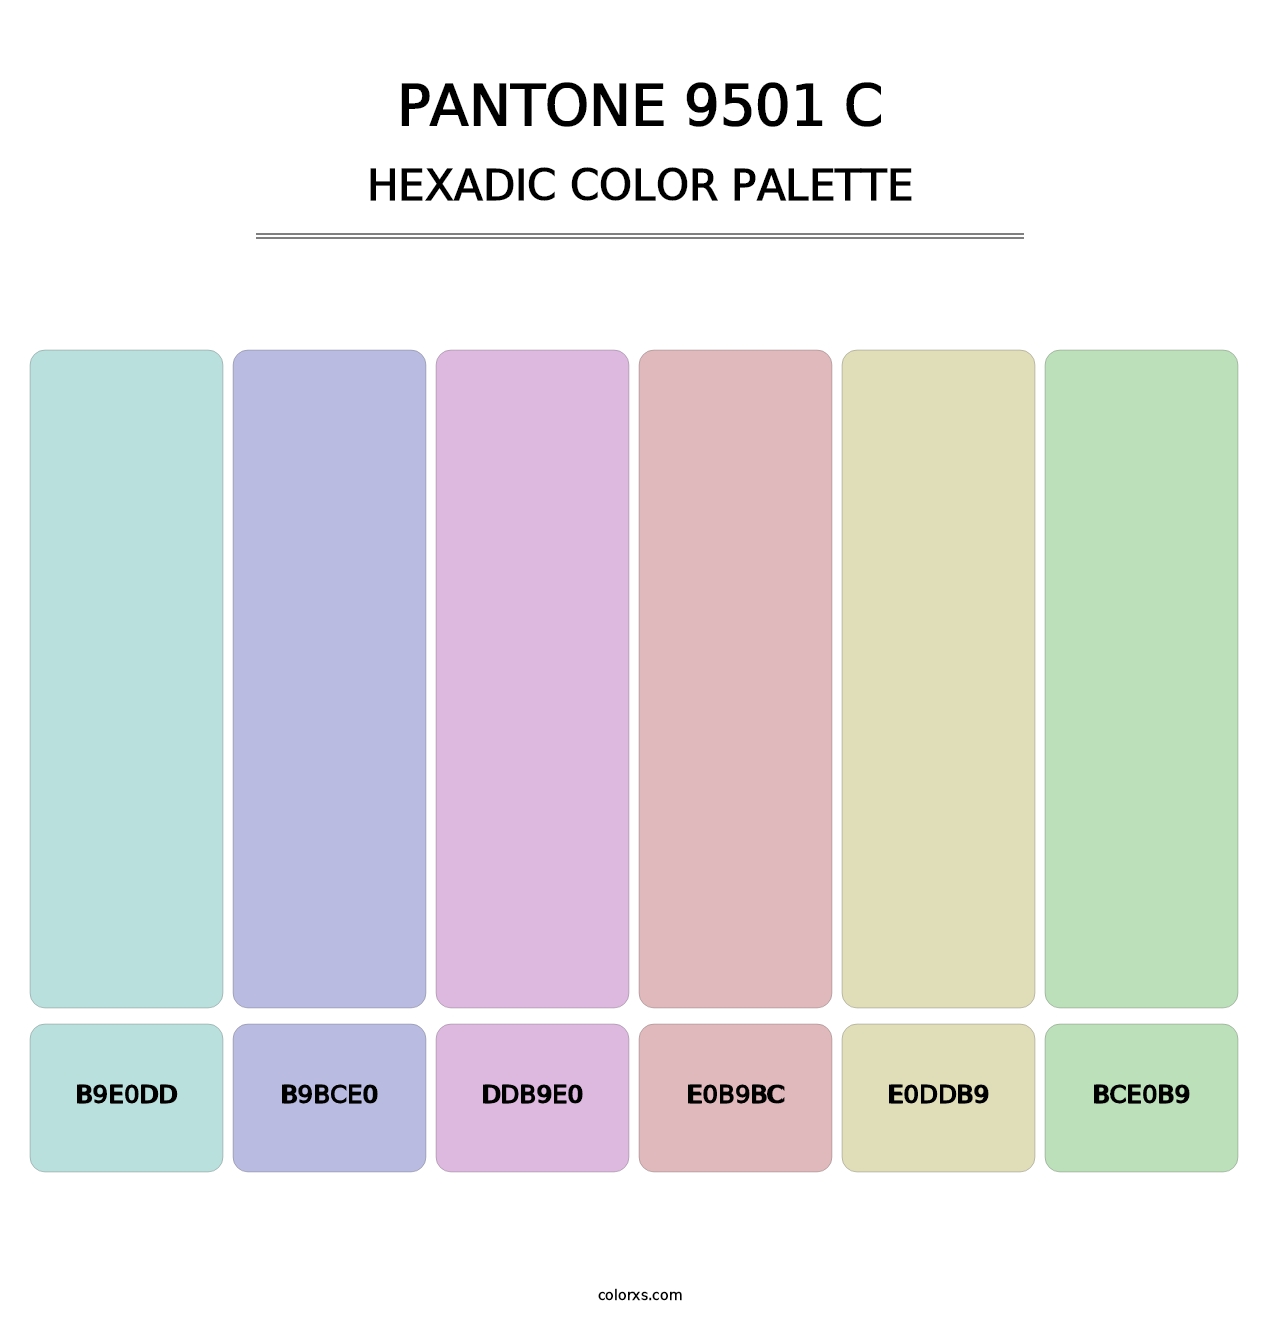 PANTONE 9501 C - Hexadic Color Palette